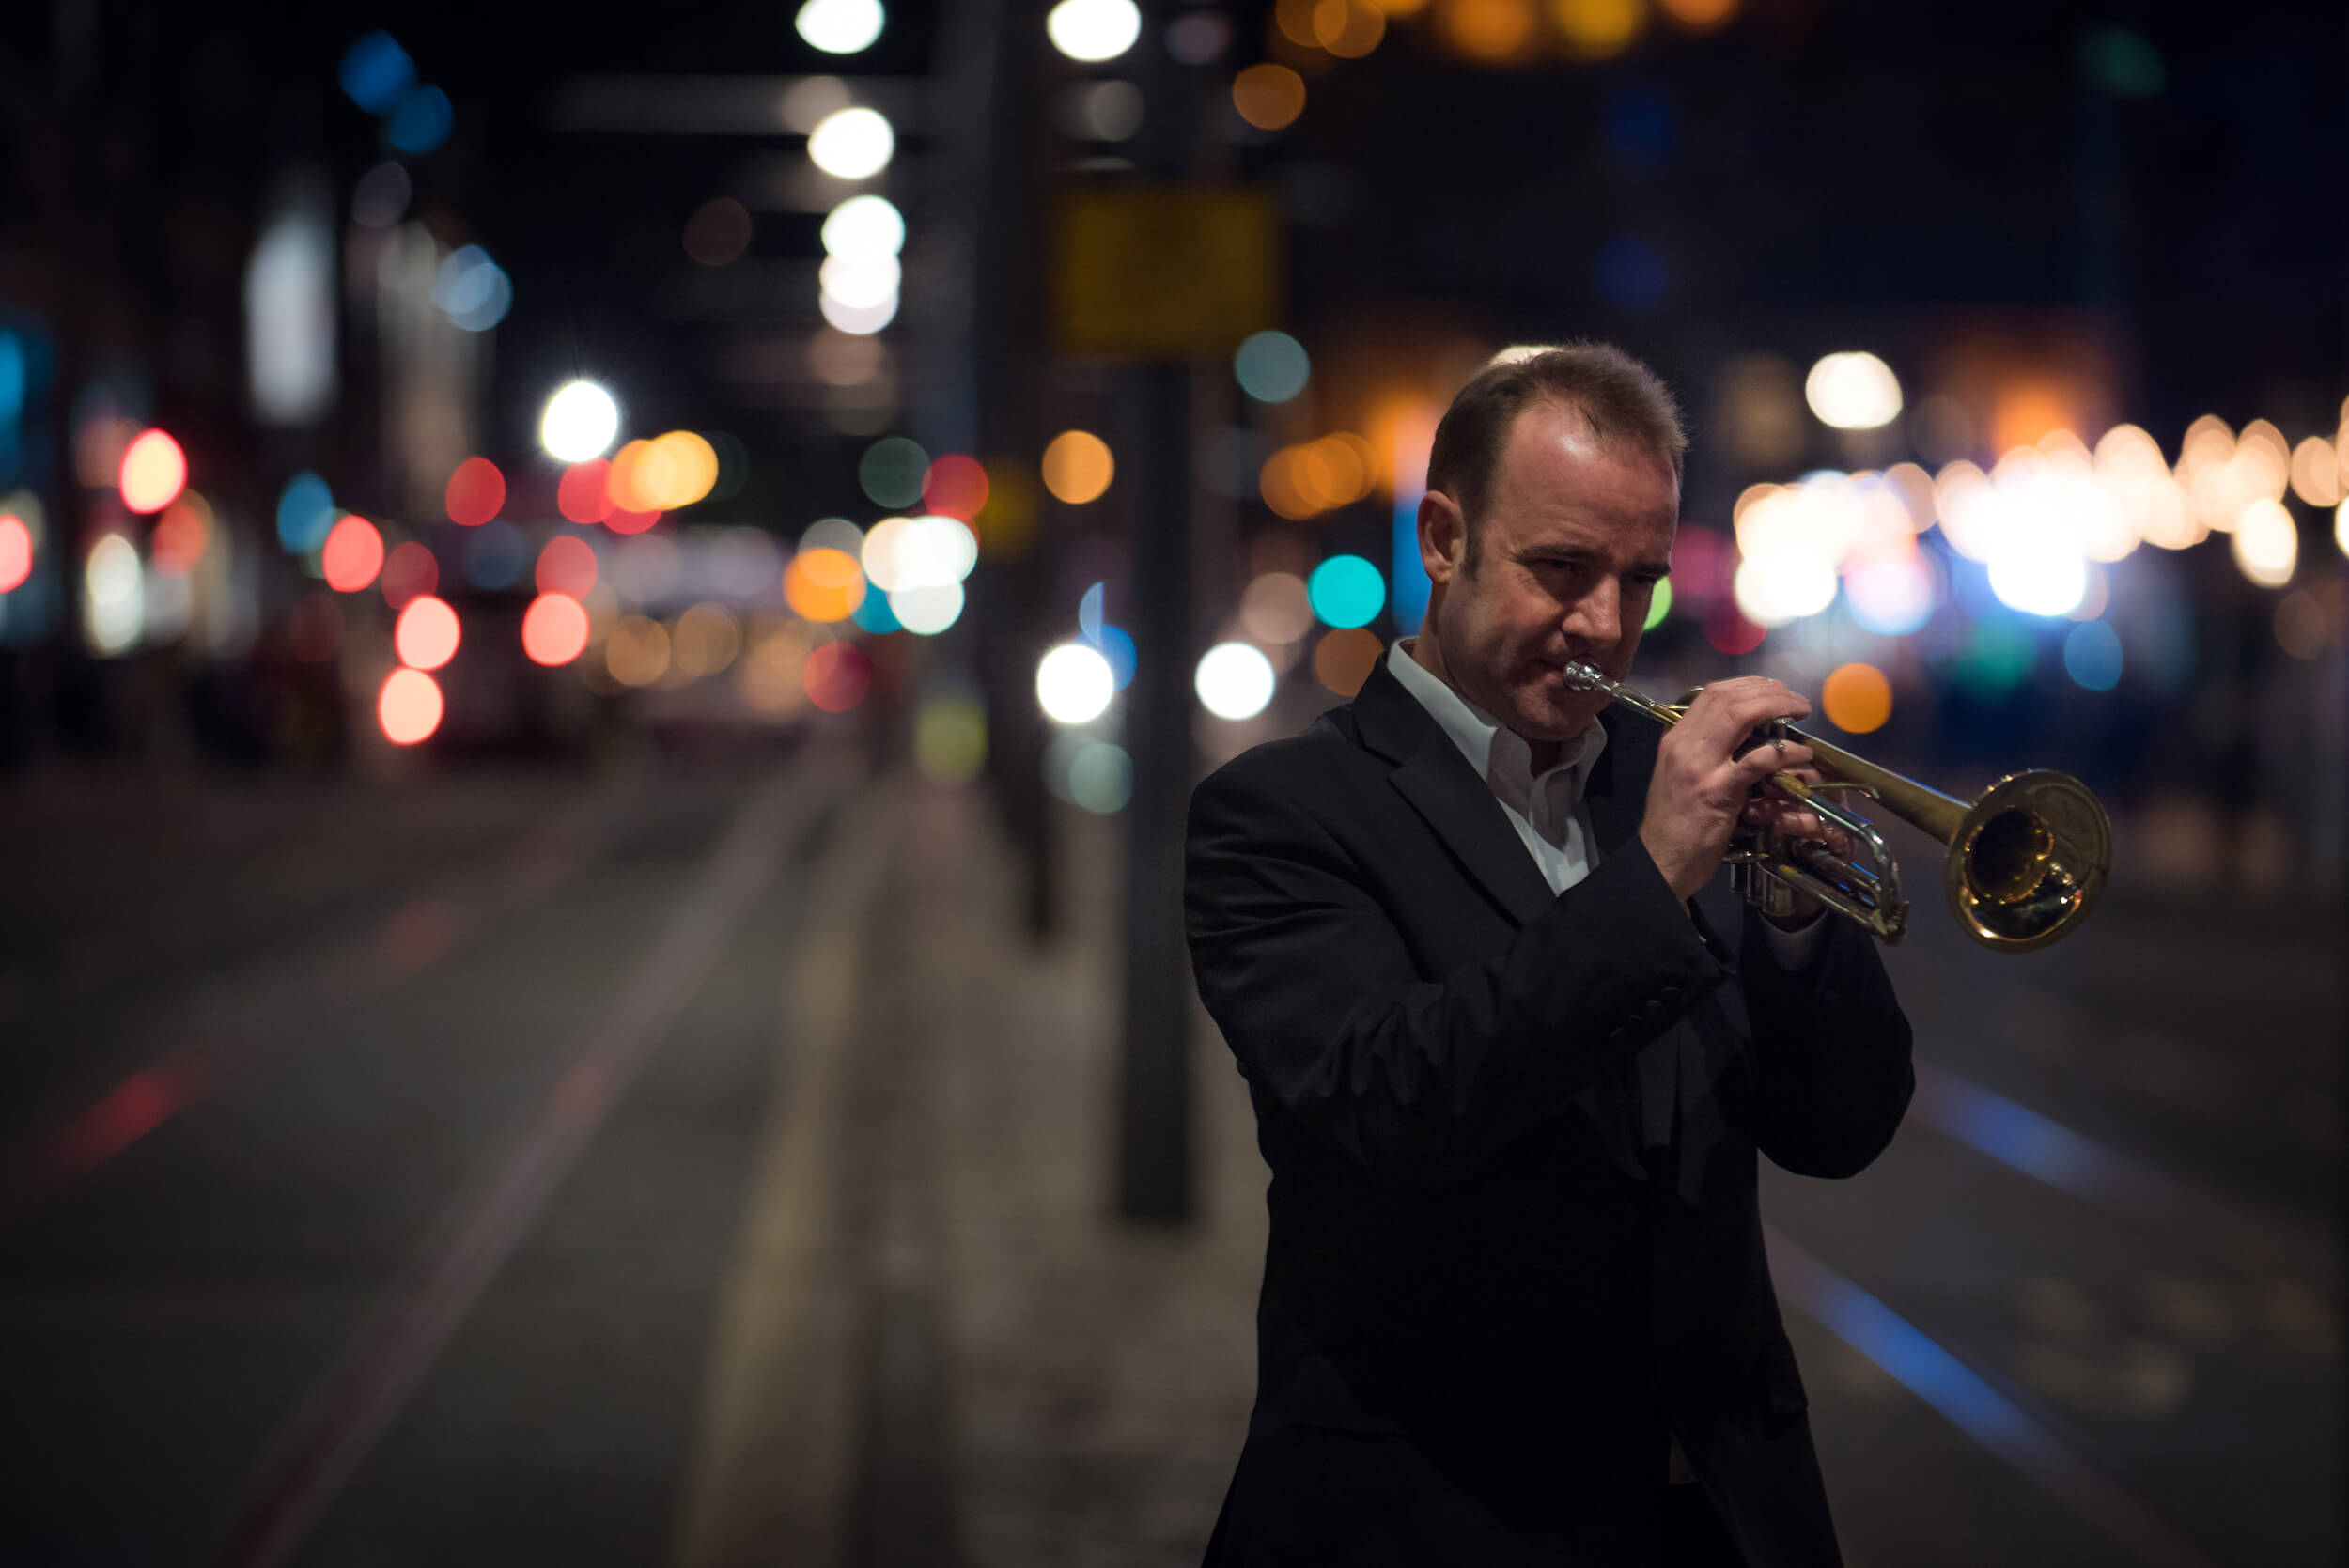 Artist playing trumpet on street